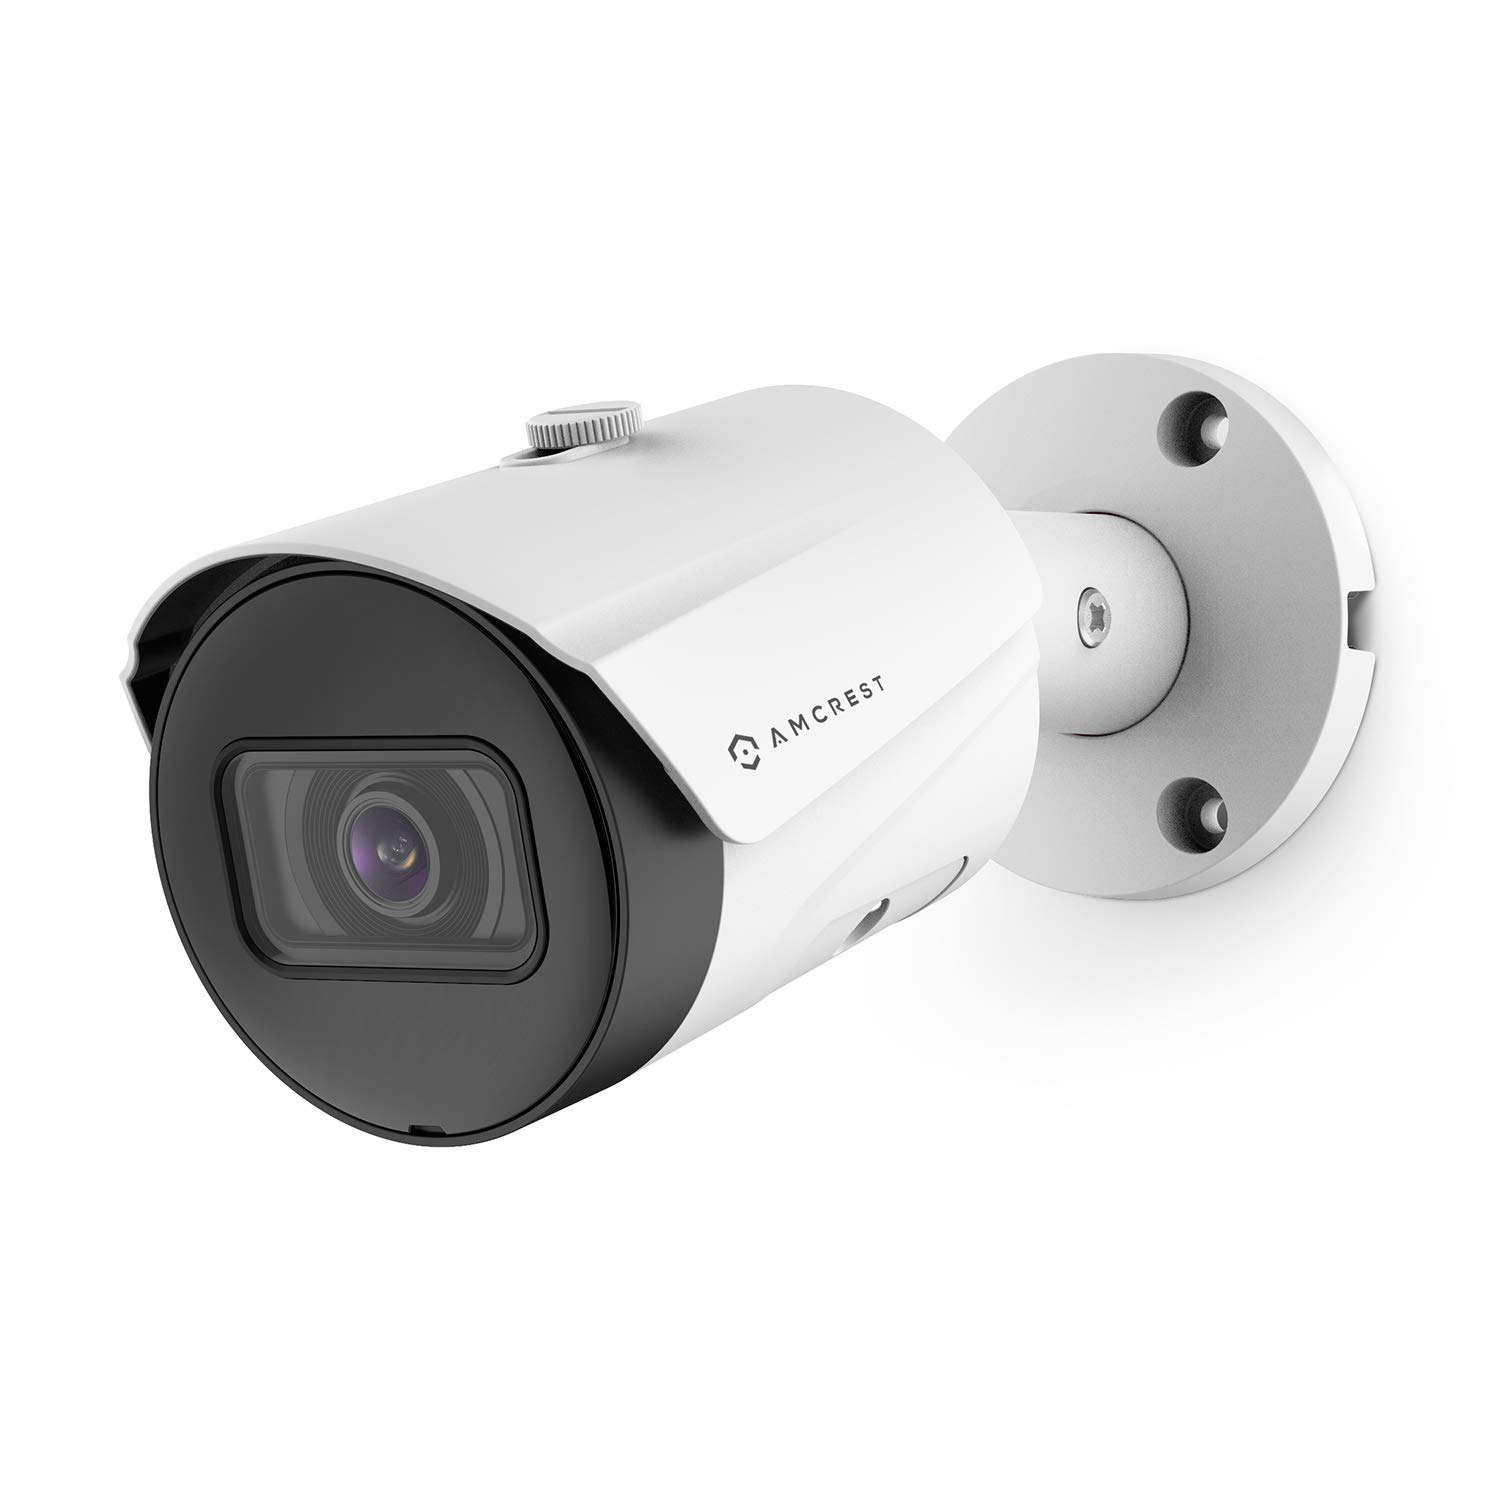 4K POE Camera 30fps UltraHD 8MP Outdoor Bullet PoE IP Camera, 164ft Night Vision, 6.0mm Narrower Lens, 55° Viewing Angle, IP67 Weatherproof, 4K (3840x2160) @30fps, White (IP8M-2597EW-6MM)